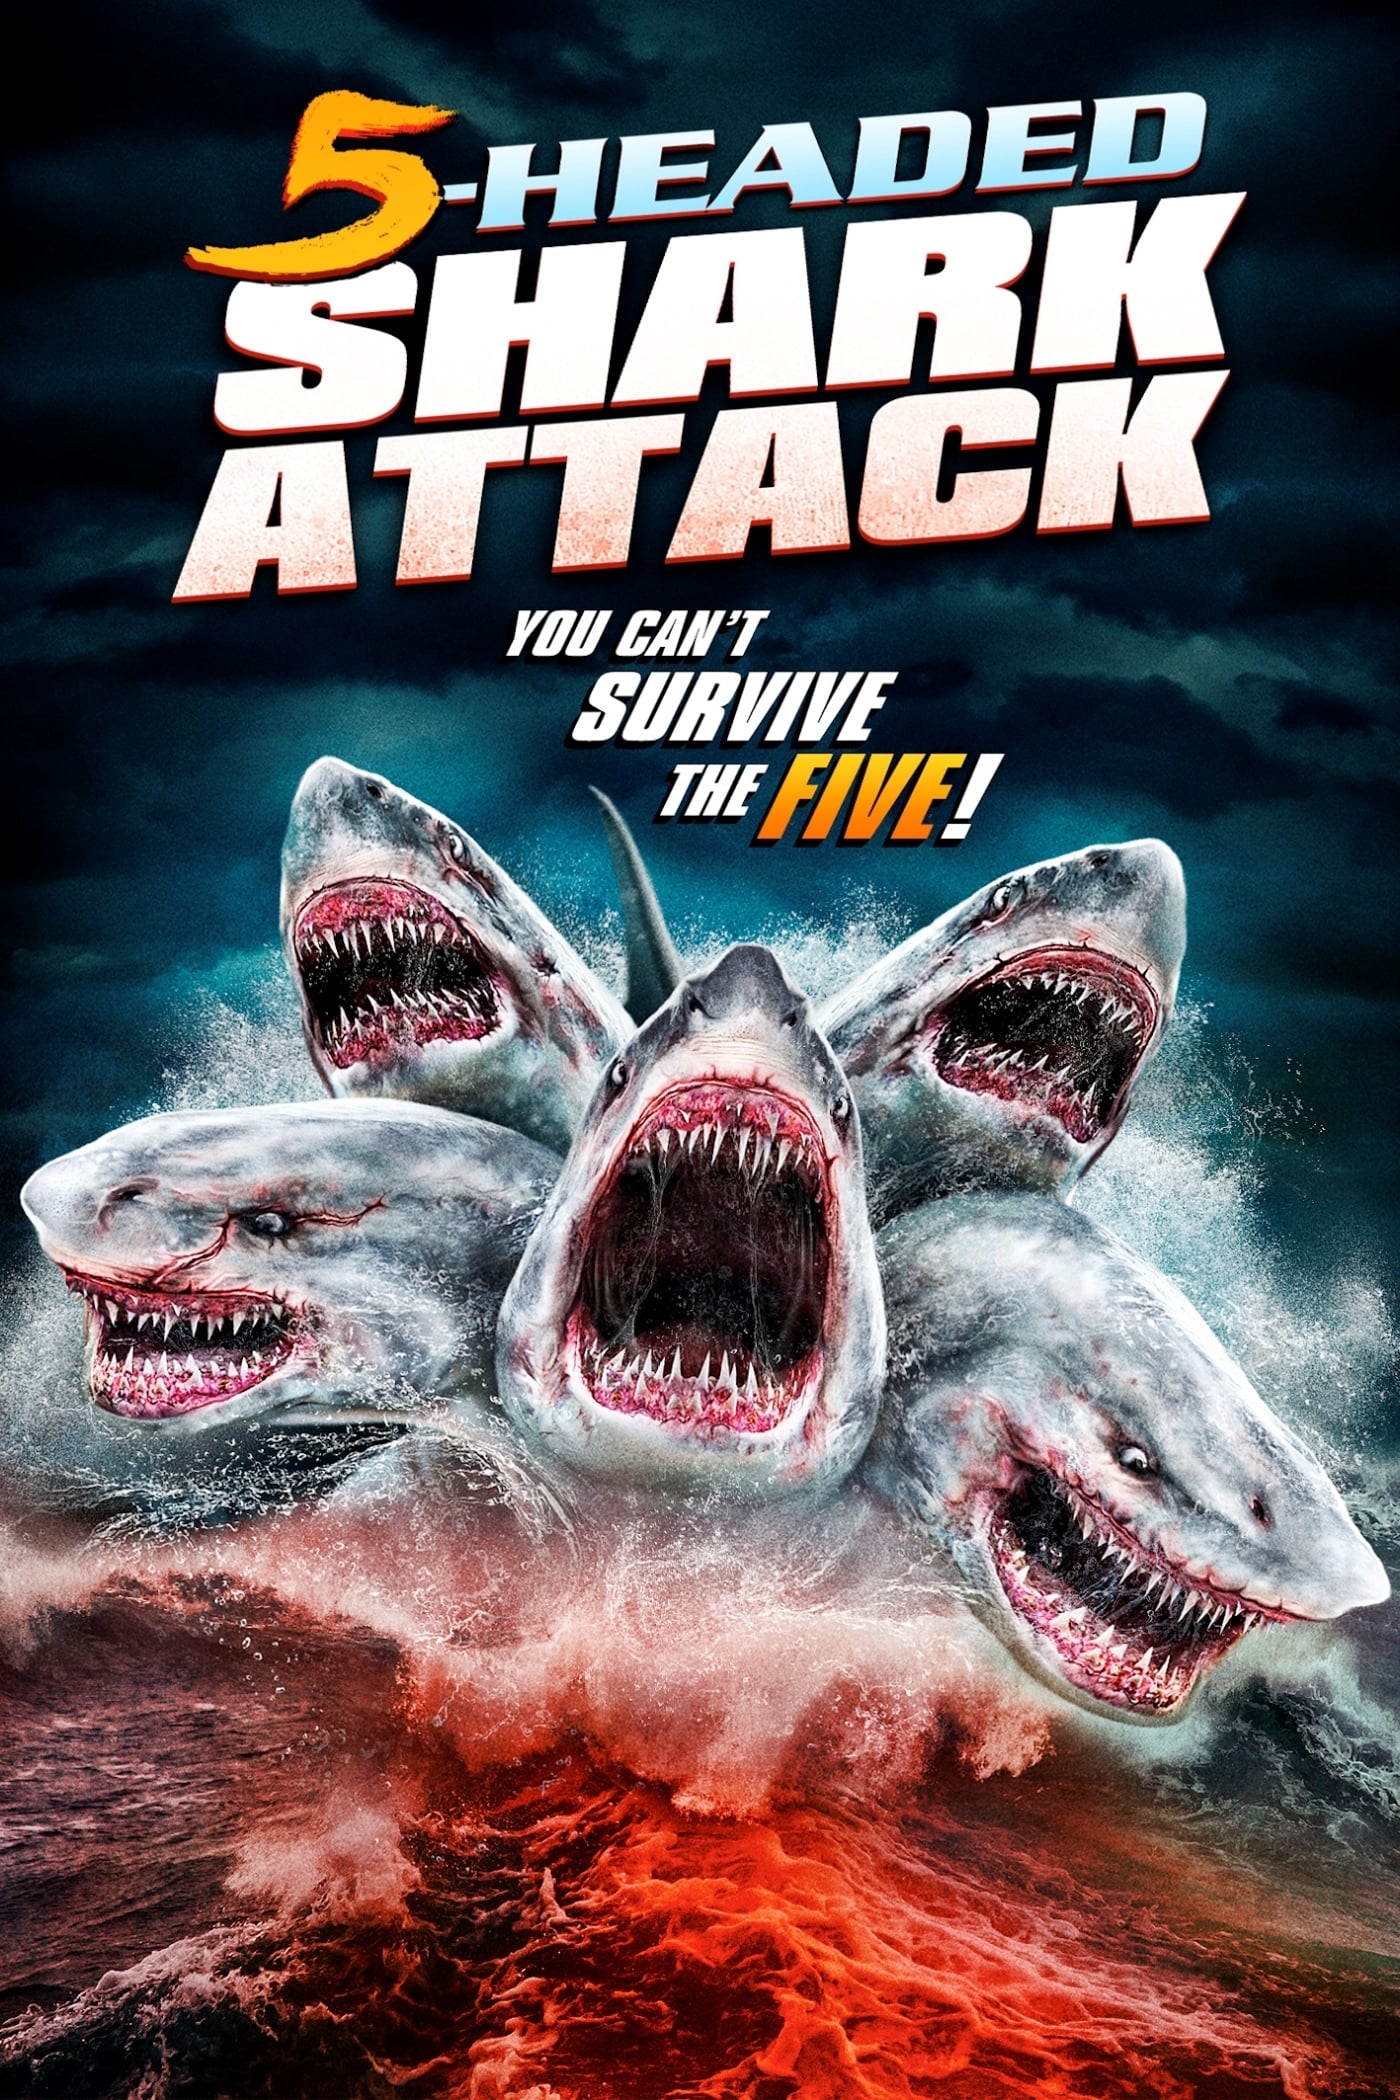 Нападение пятиглавой. Нападение пятиглавой акулы / 5 headed Shark Attack (2017). Атака МЕГАЛОДОНА.